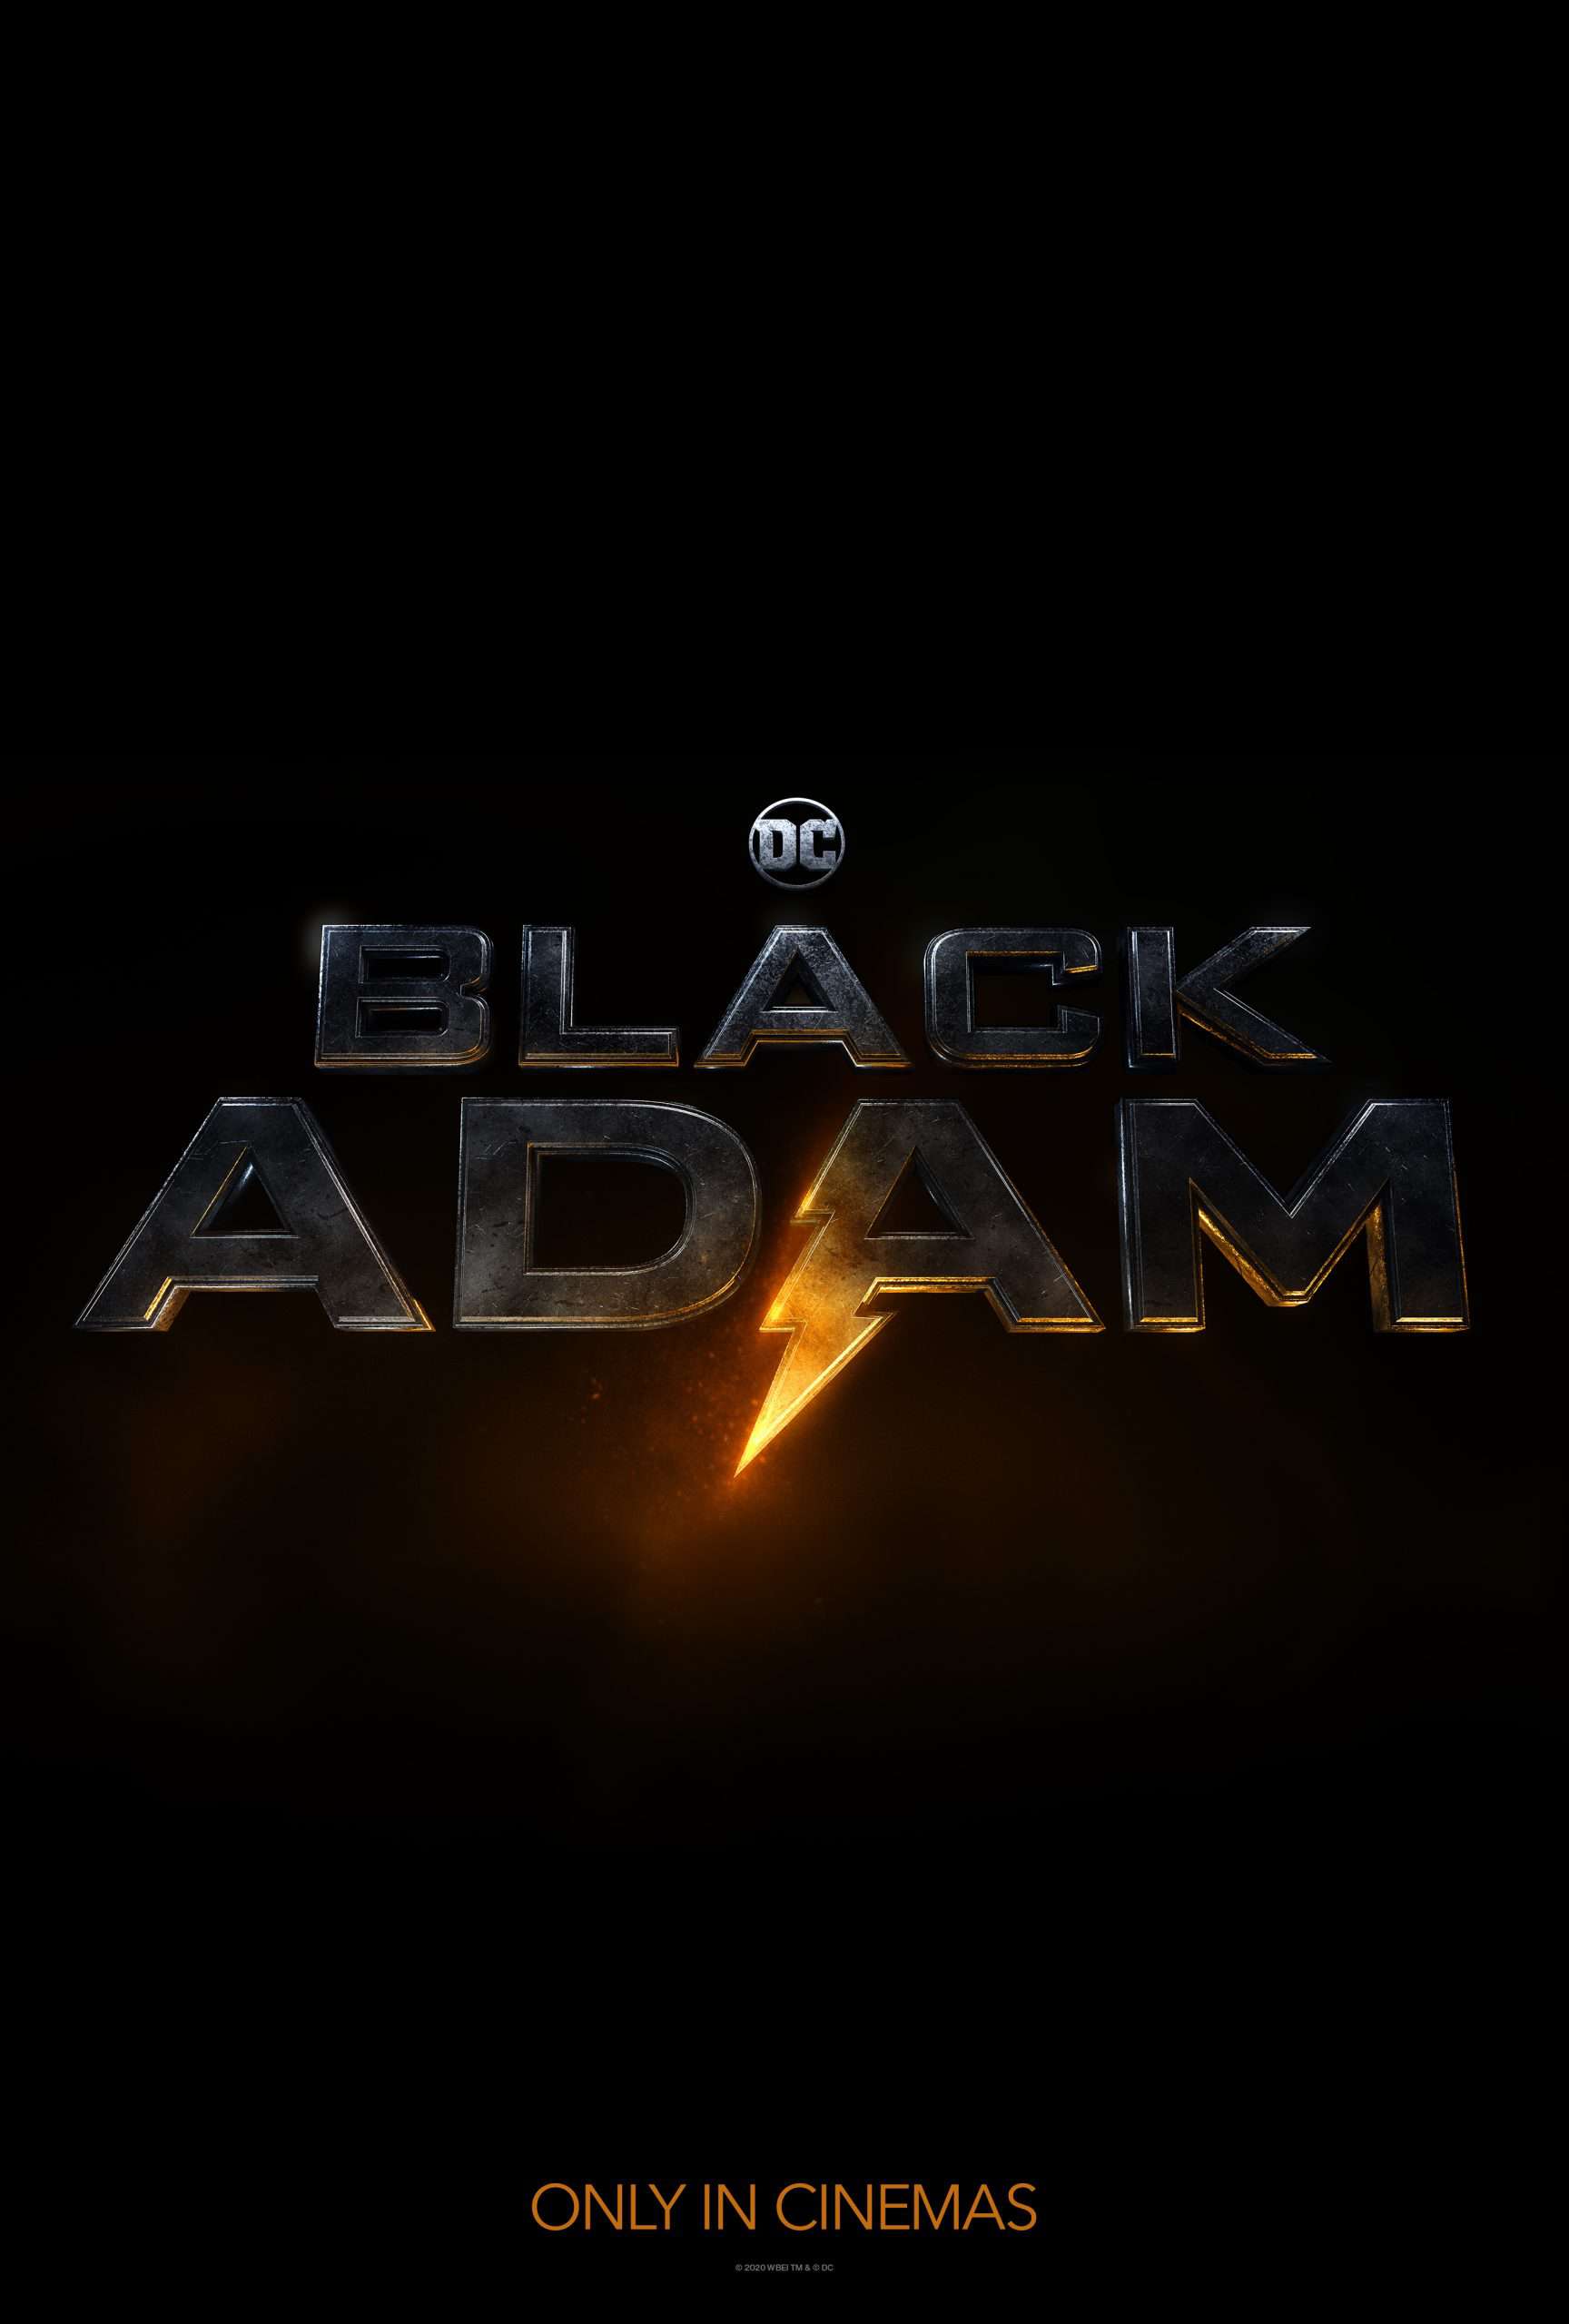 Dwayne Johnson als Black Adam